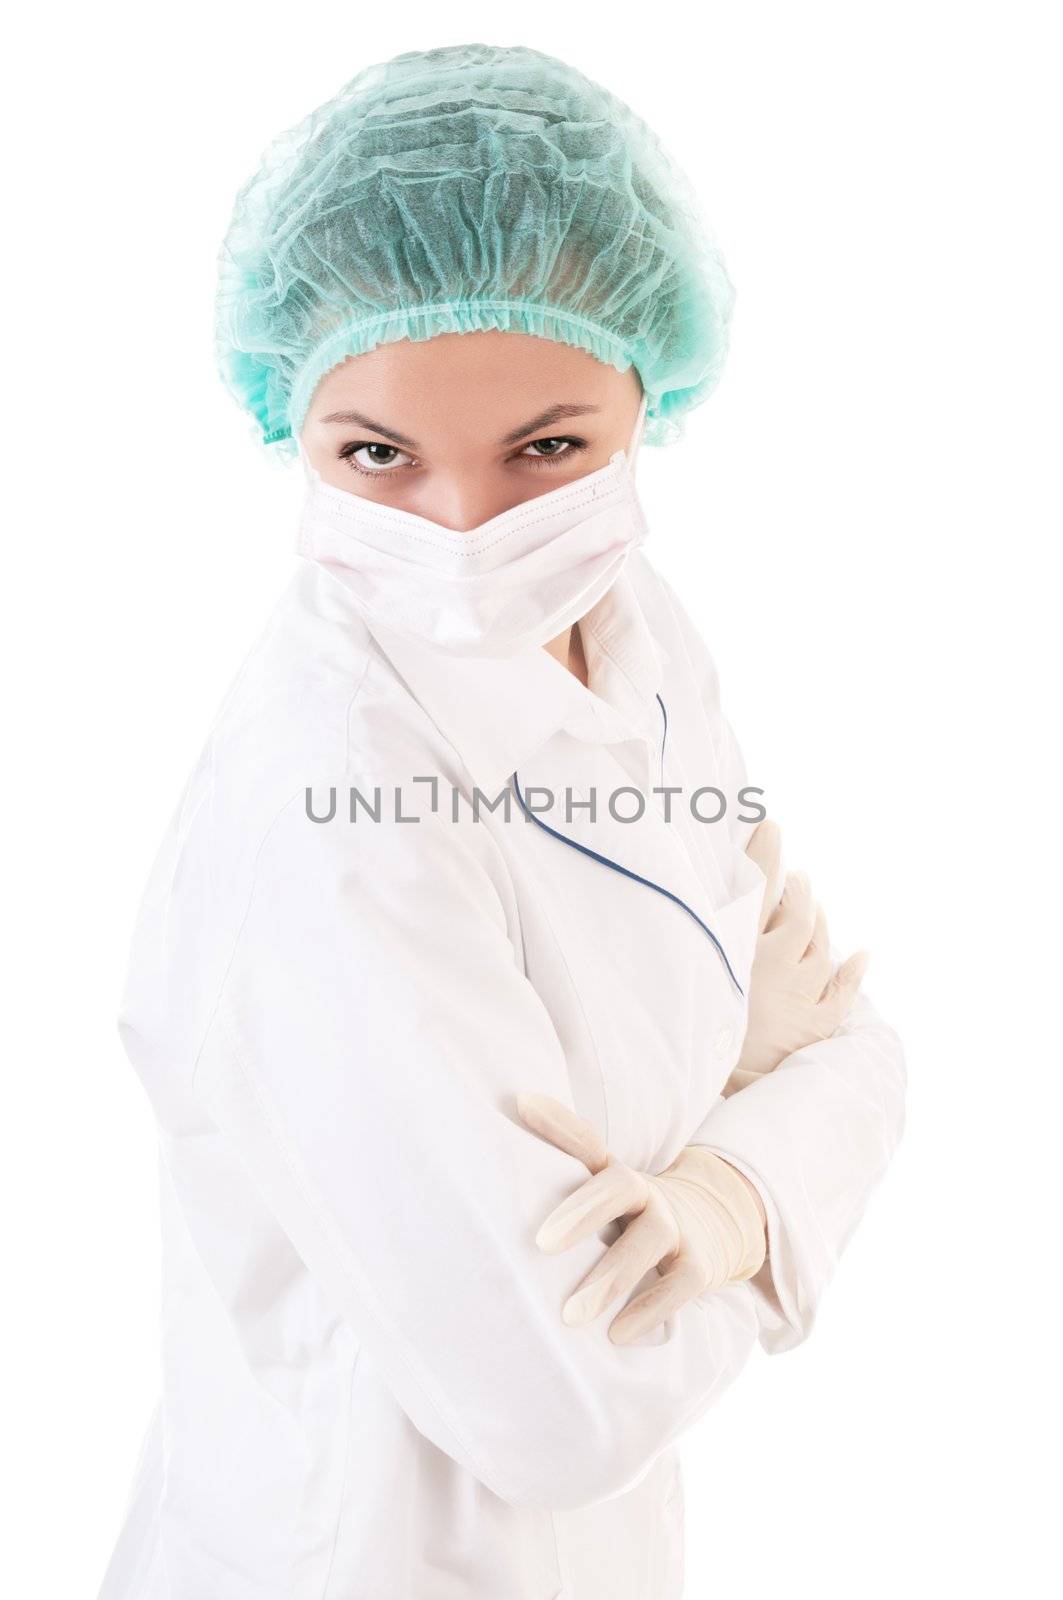 Playful winking doctor isolated on white background